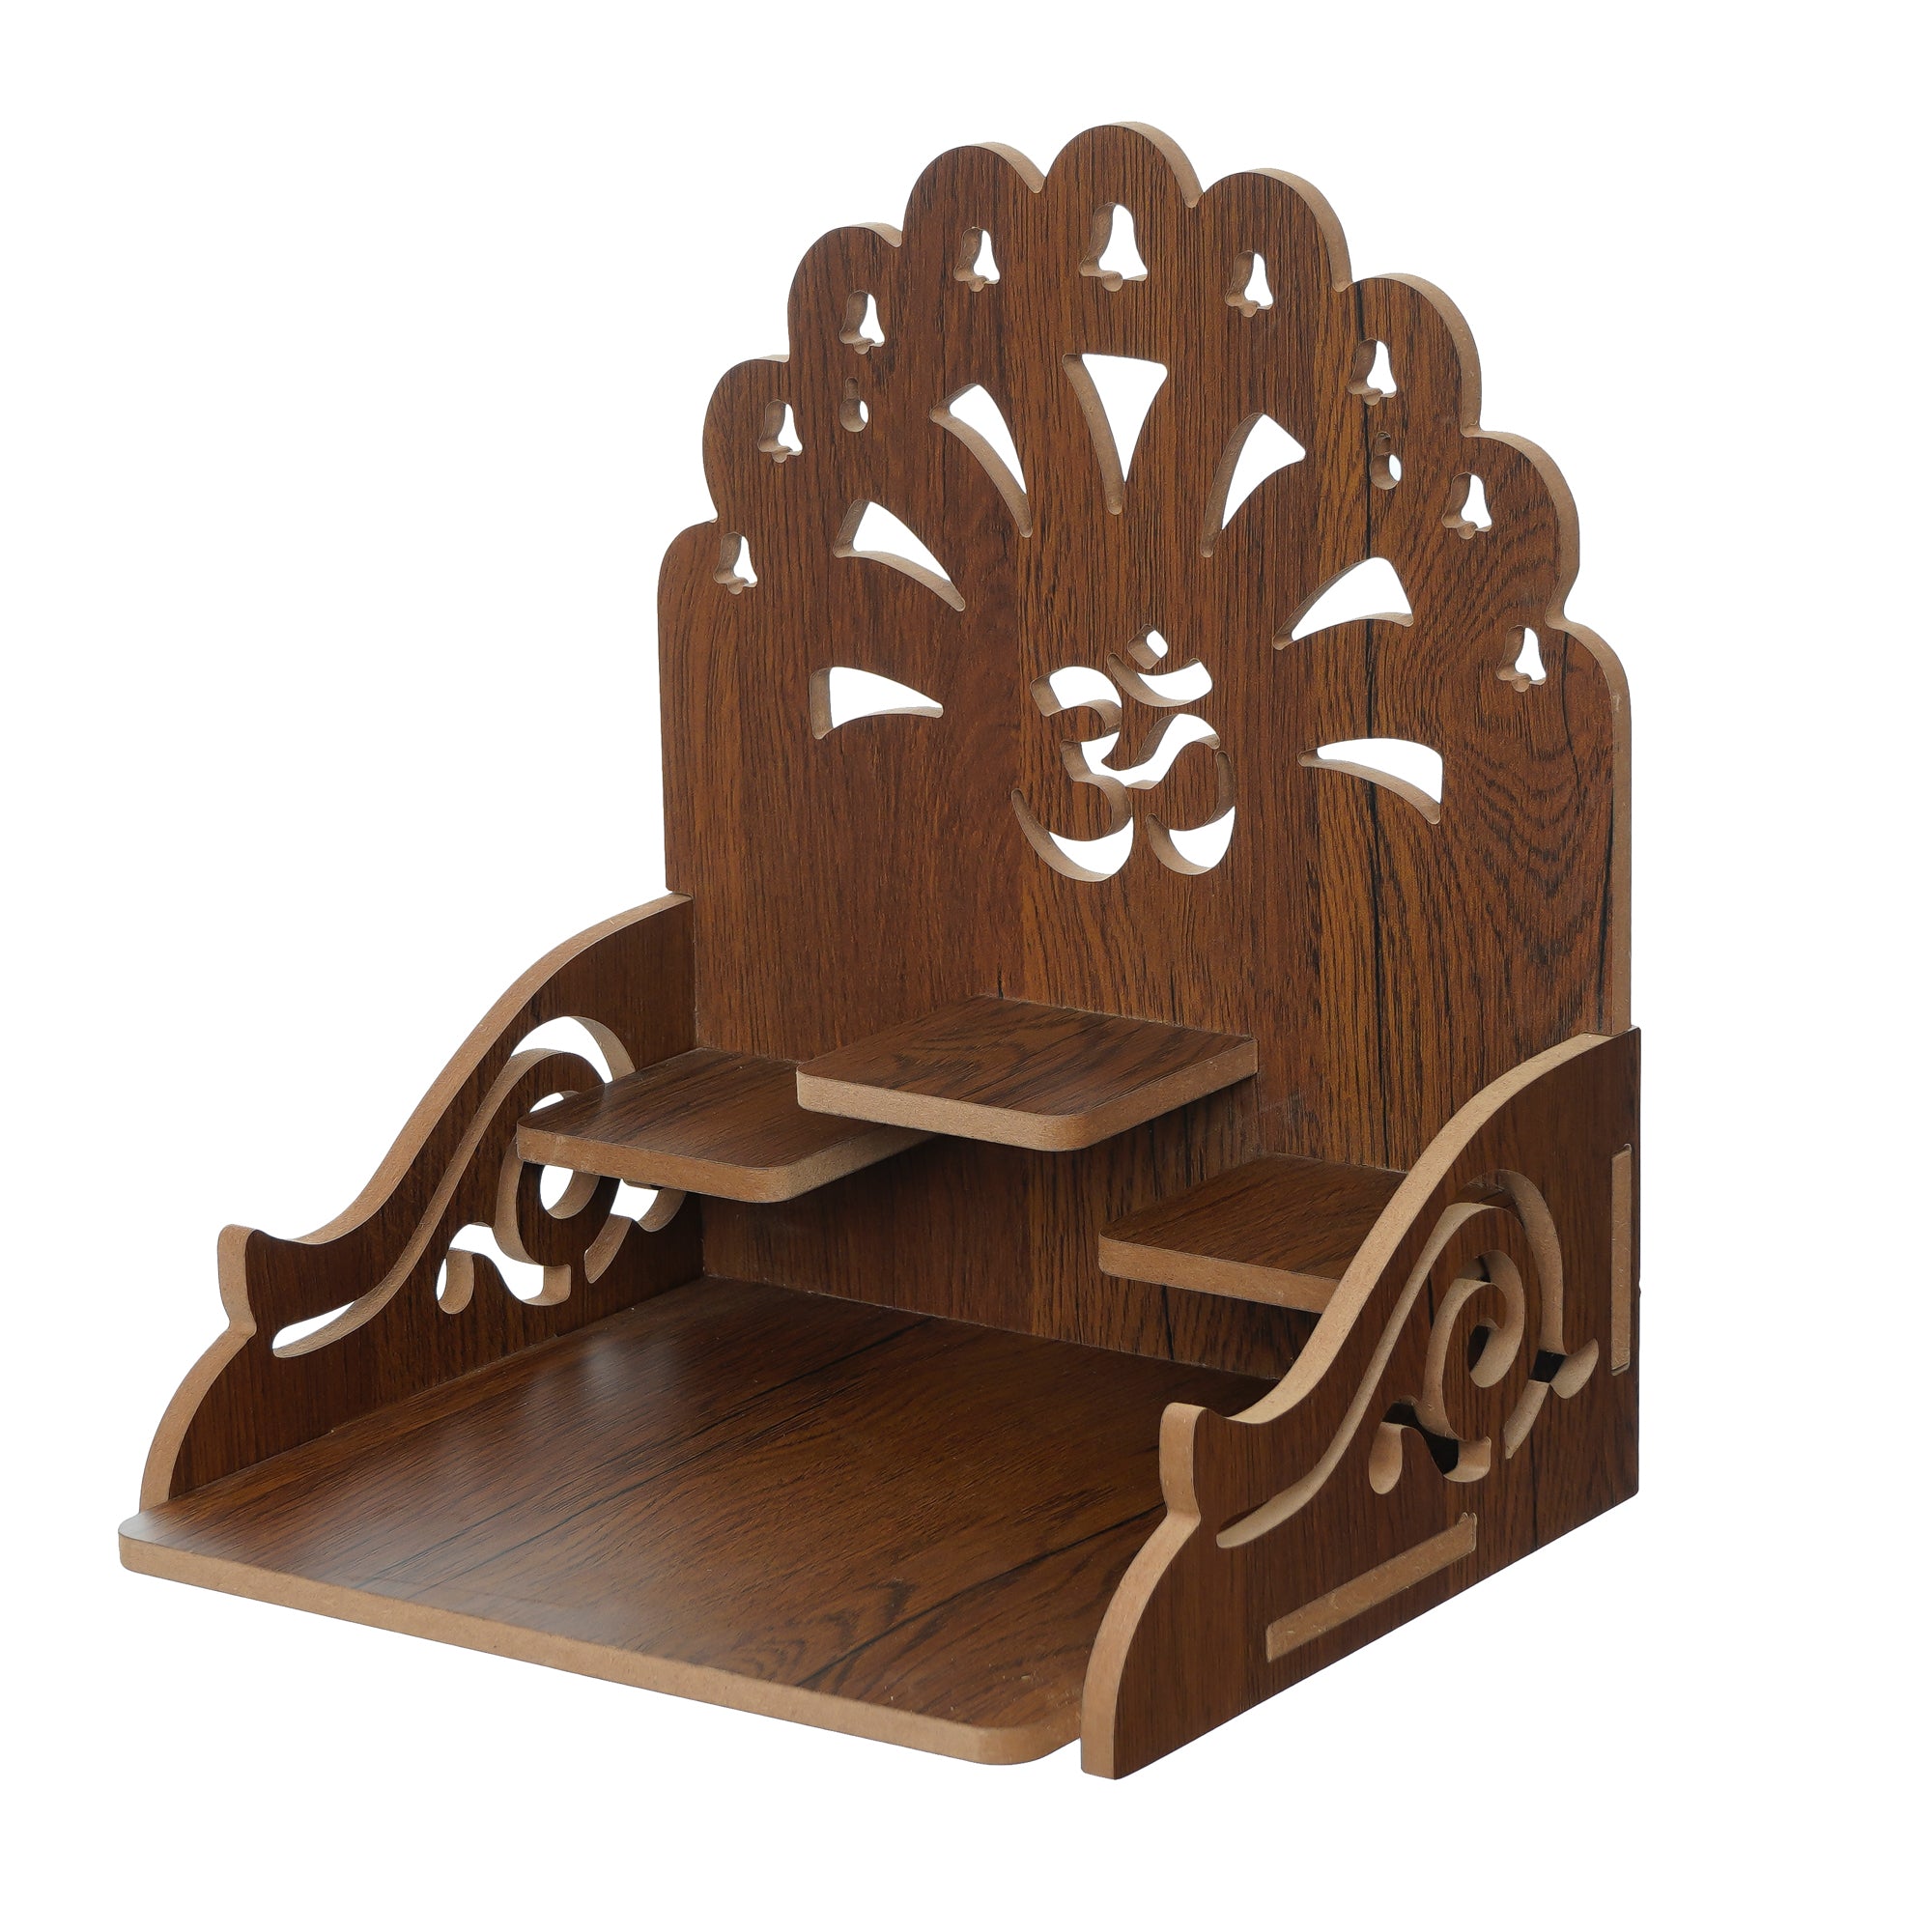 Om with Bells Design and 3 Shelfs Laminated Wood Pooja Temple/Mandir 4